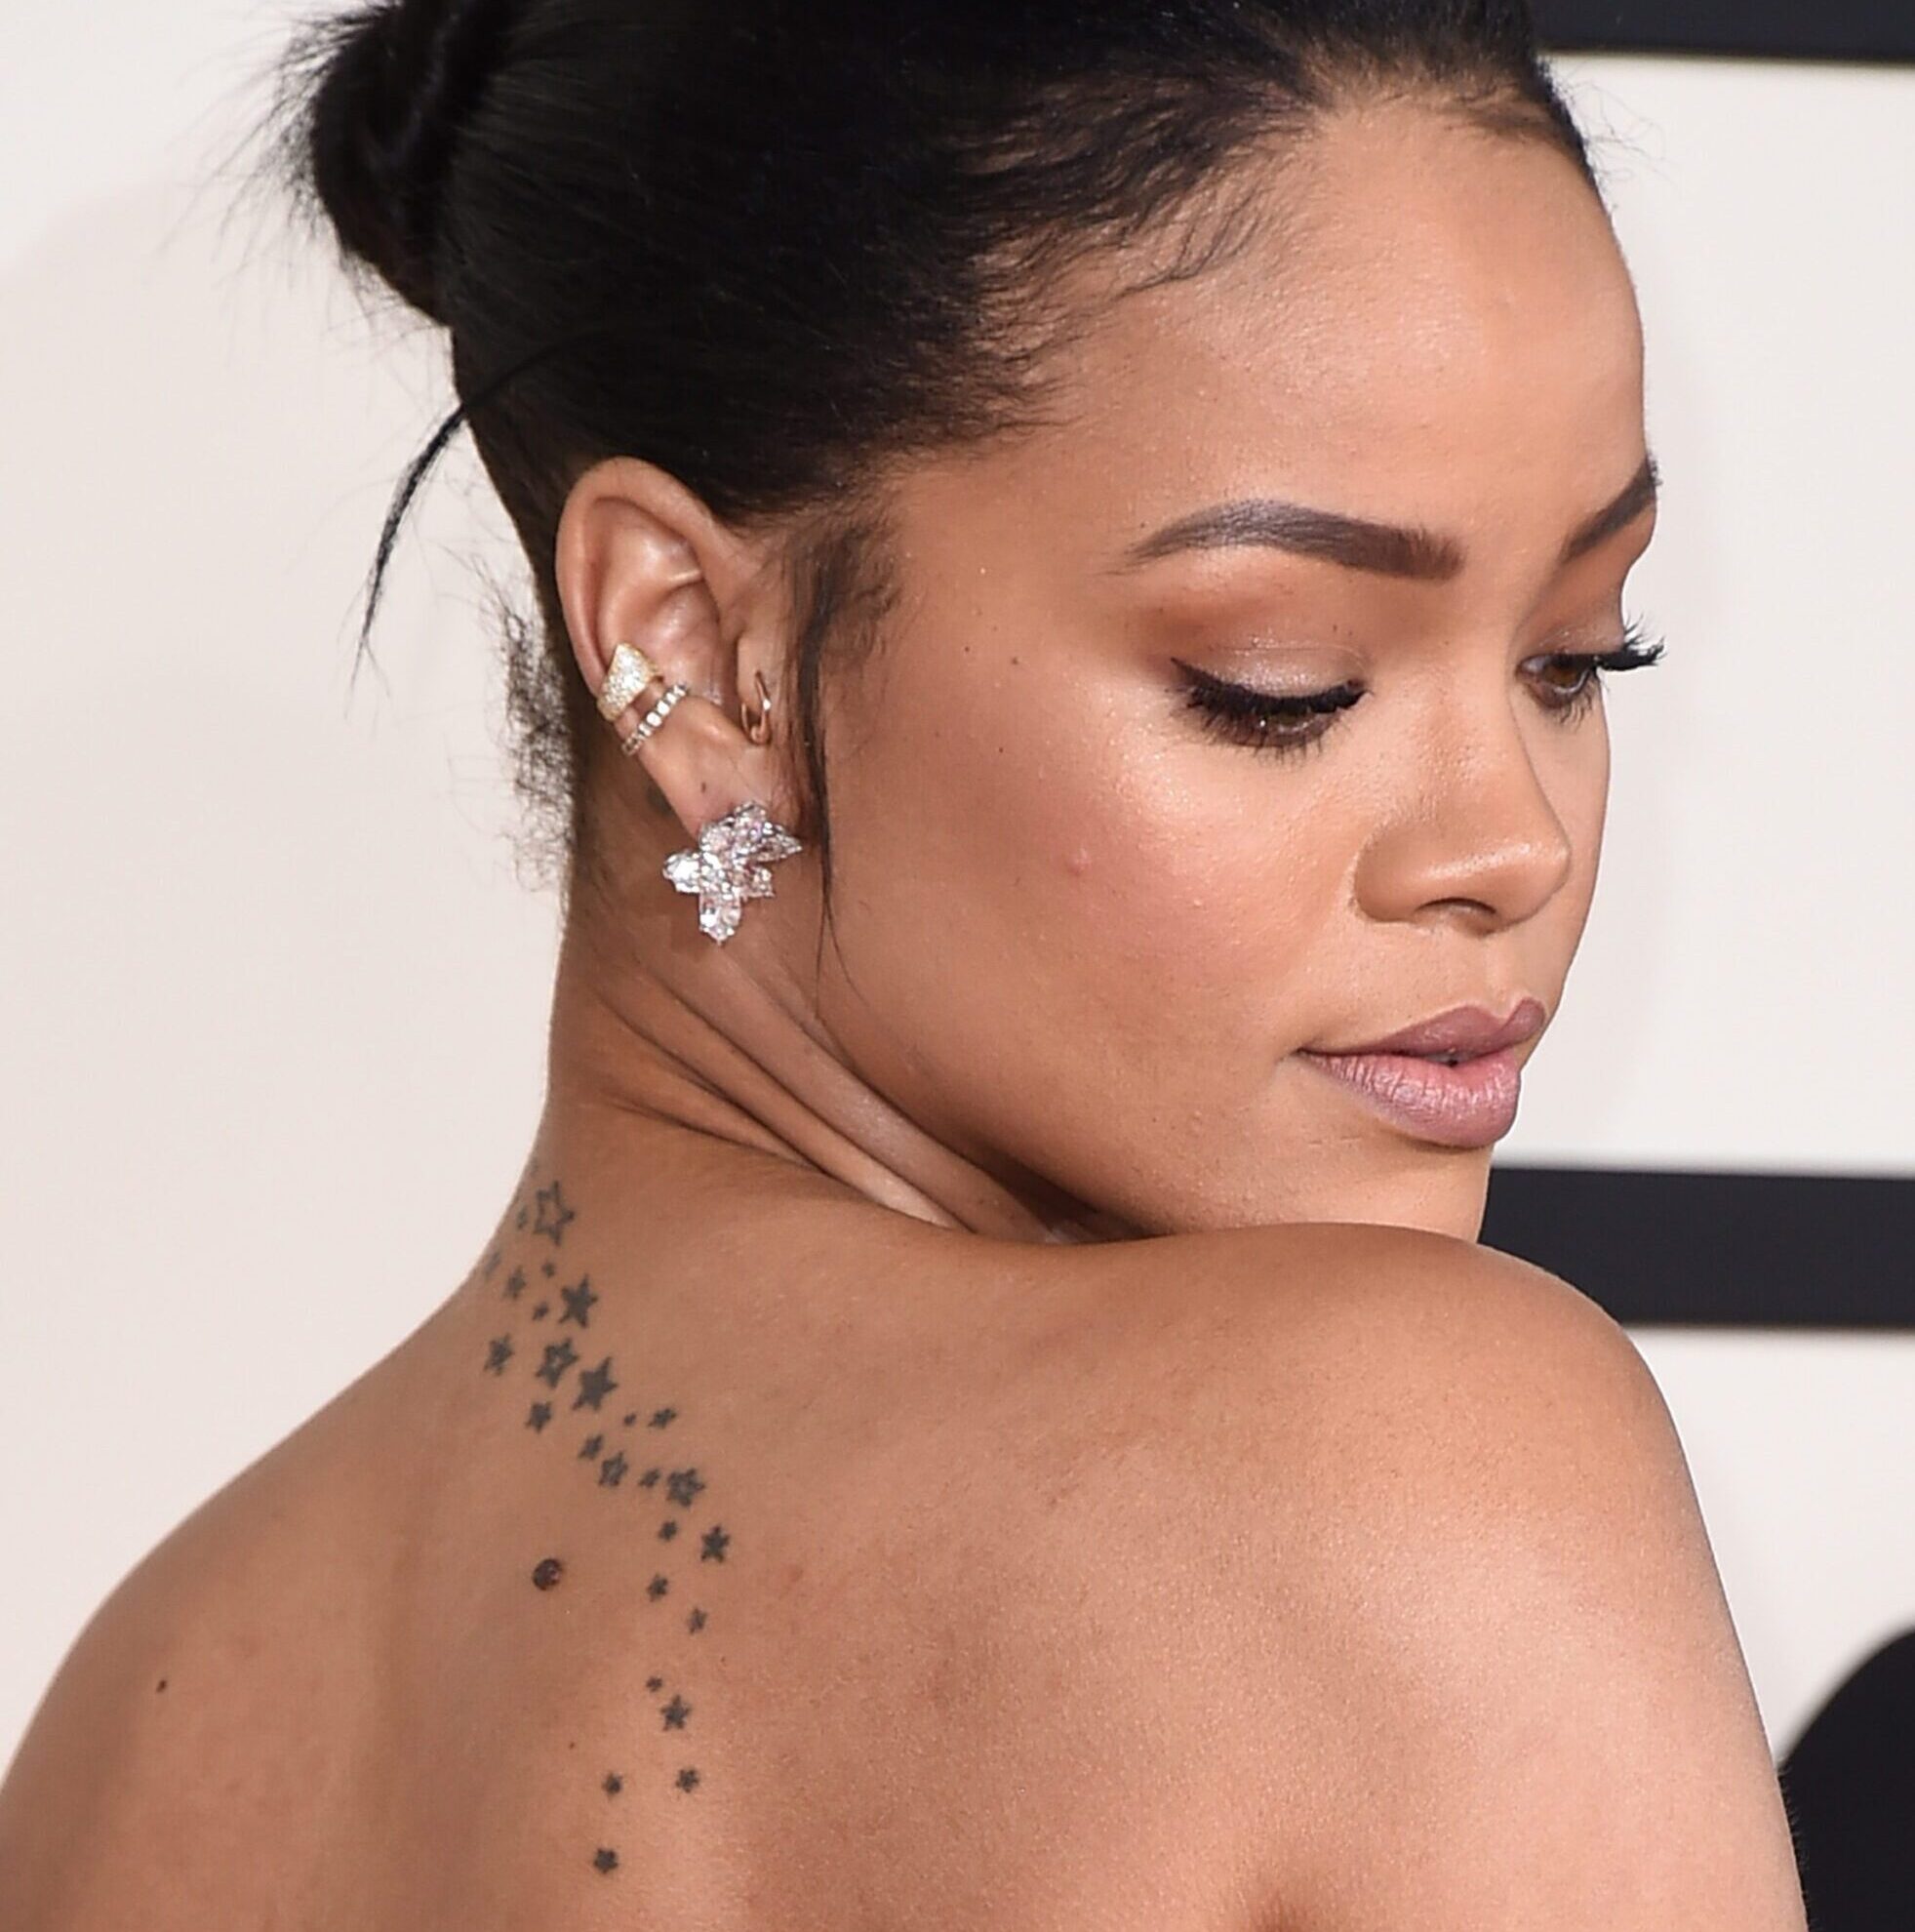 Rihanna Tattoo Star3 scaled 1 e1616689613555